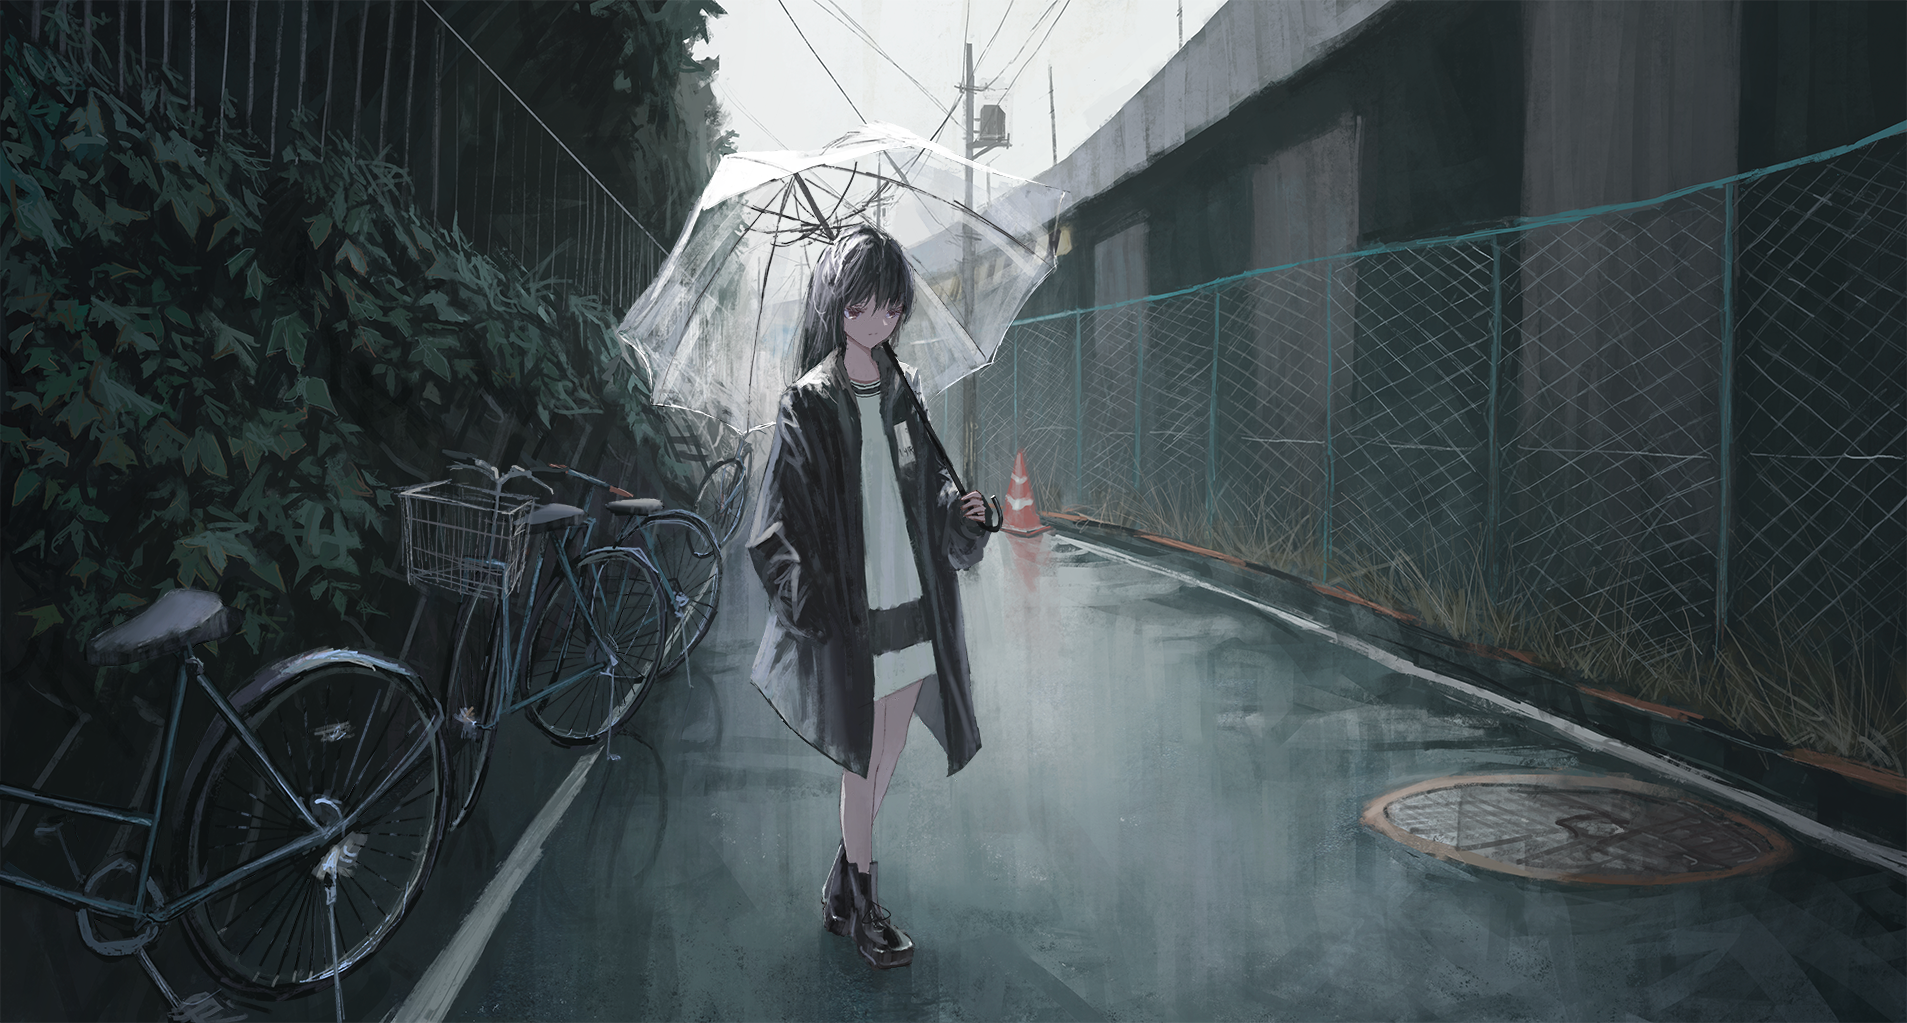 Anime 1907x1023 anime anime girls digital art artwork 2D portrait kgmnx umbrella bicycle open coat dress dark hair rain